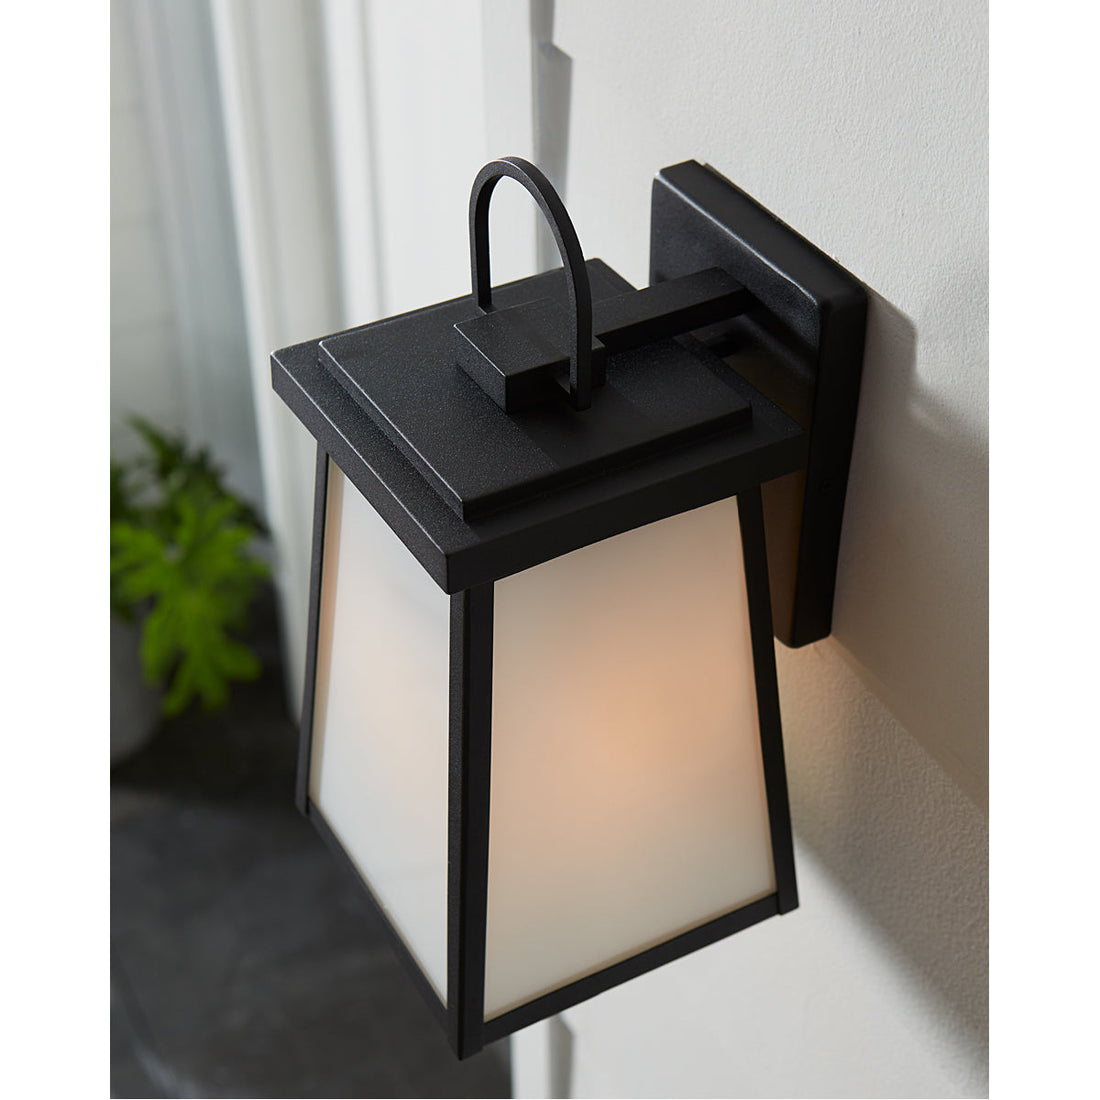 Sea Gull Lighting Founders Medium 1-Light Outdoor Wall Lantern